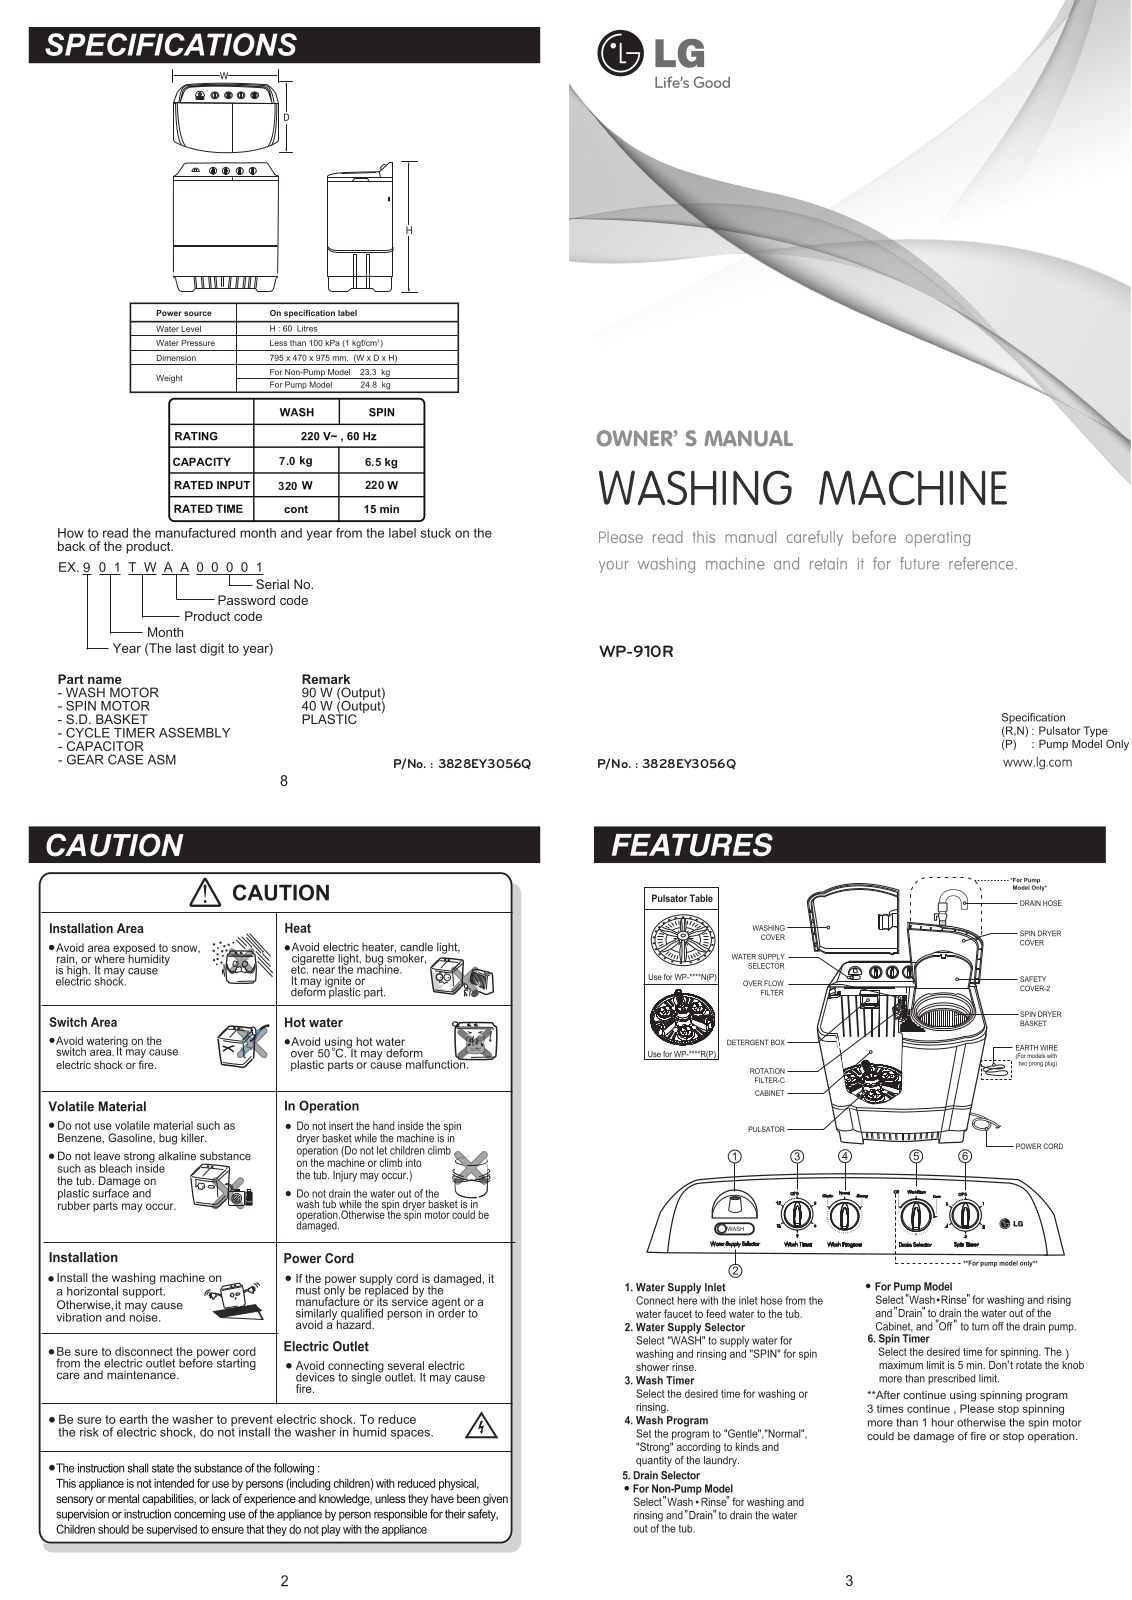 LG WP-910R Owner’s Manual